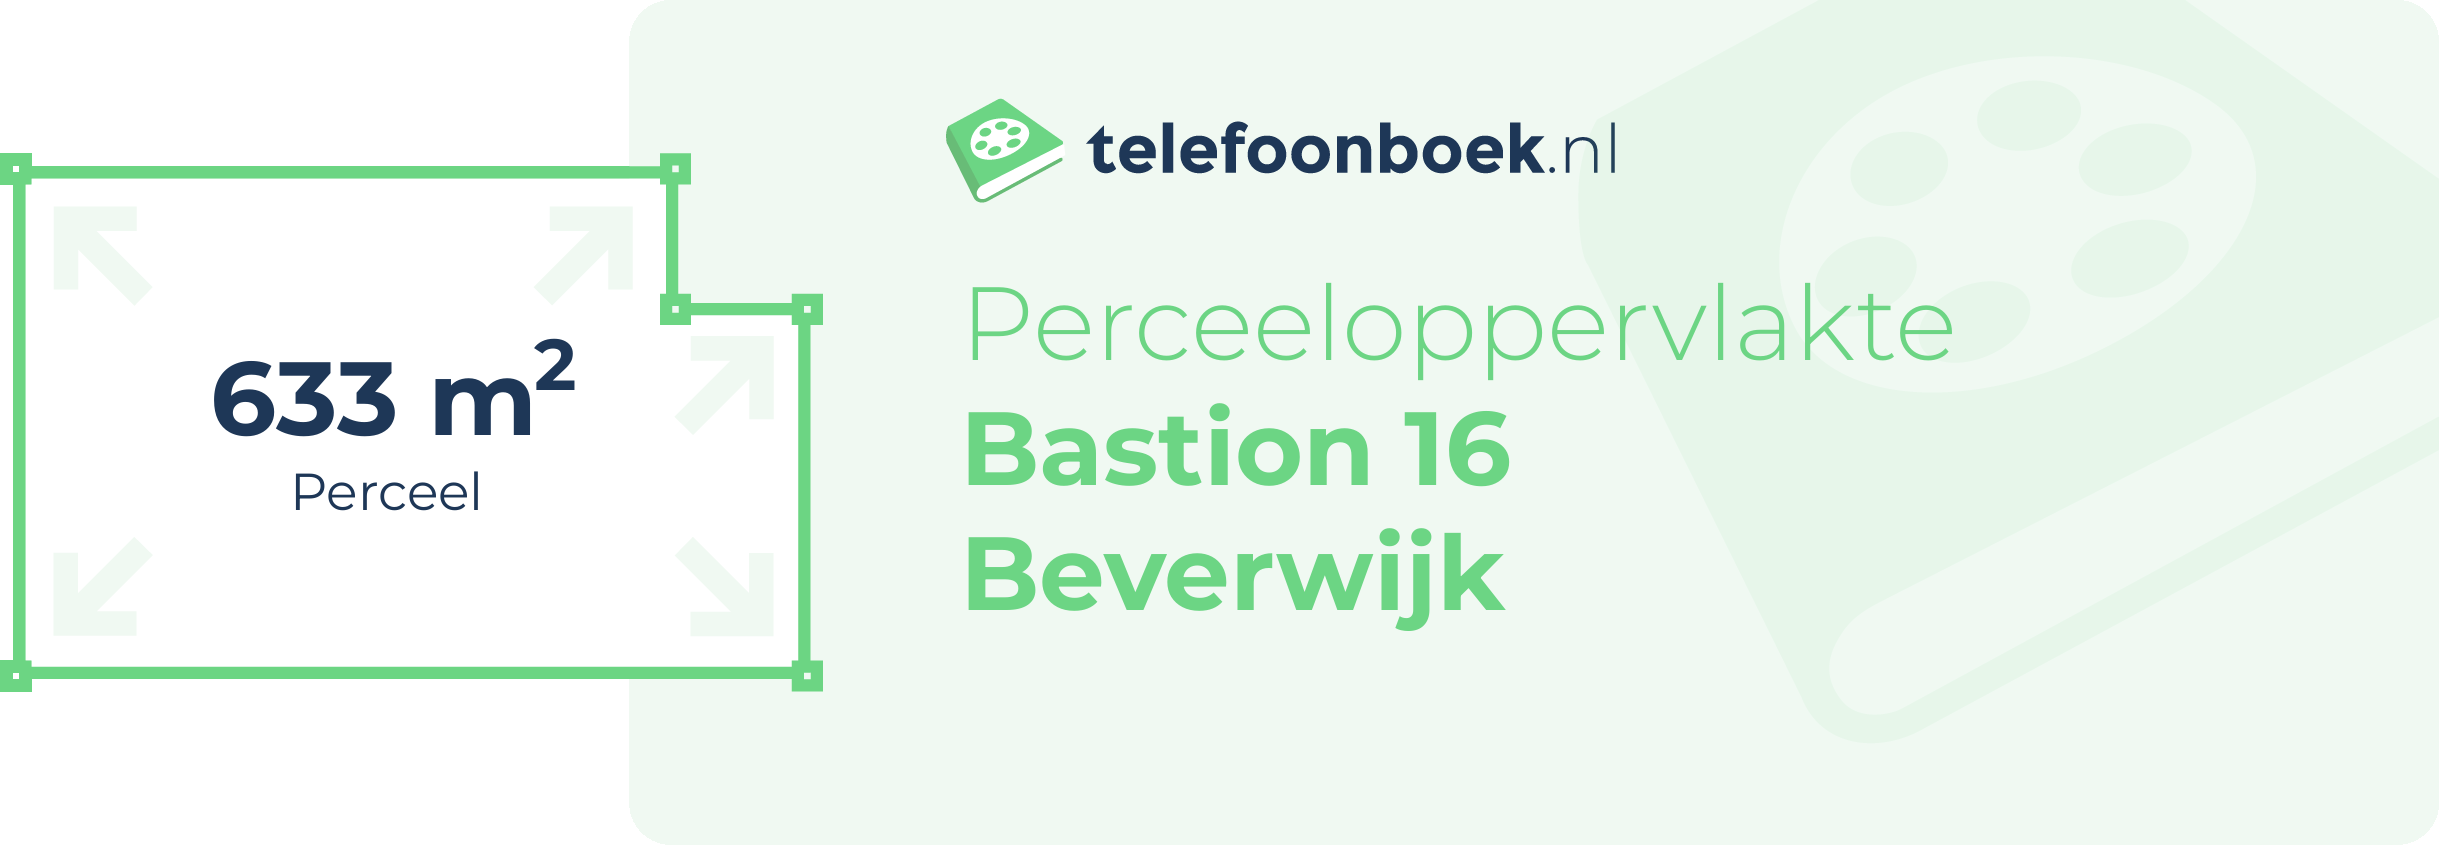 Perceeloppervlakte Bastion 16 Beverwijk